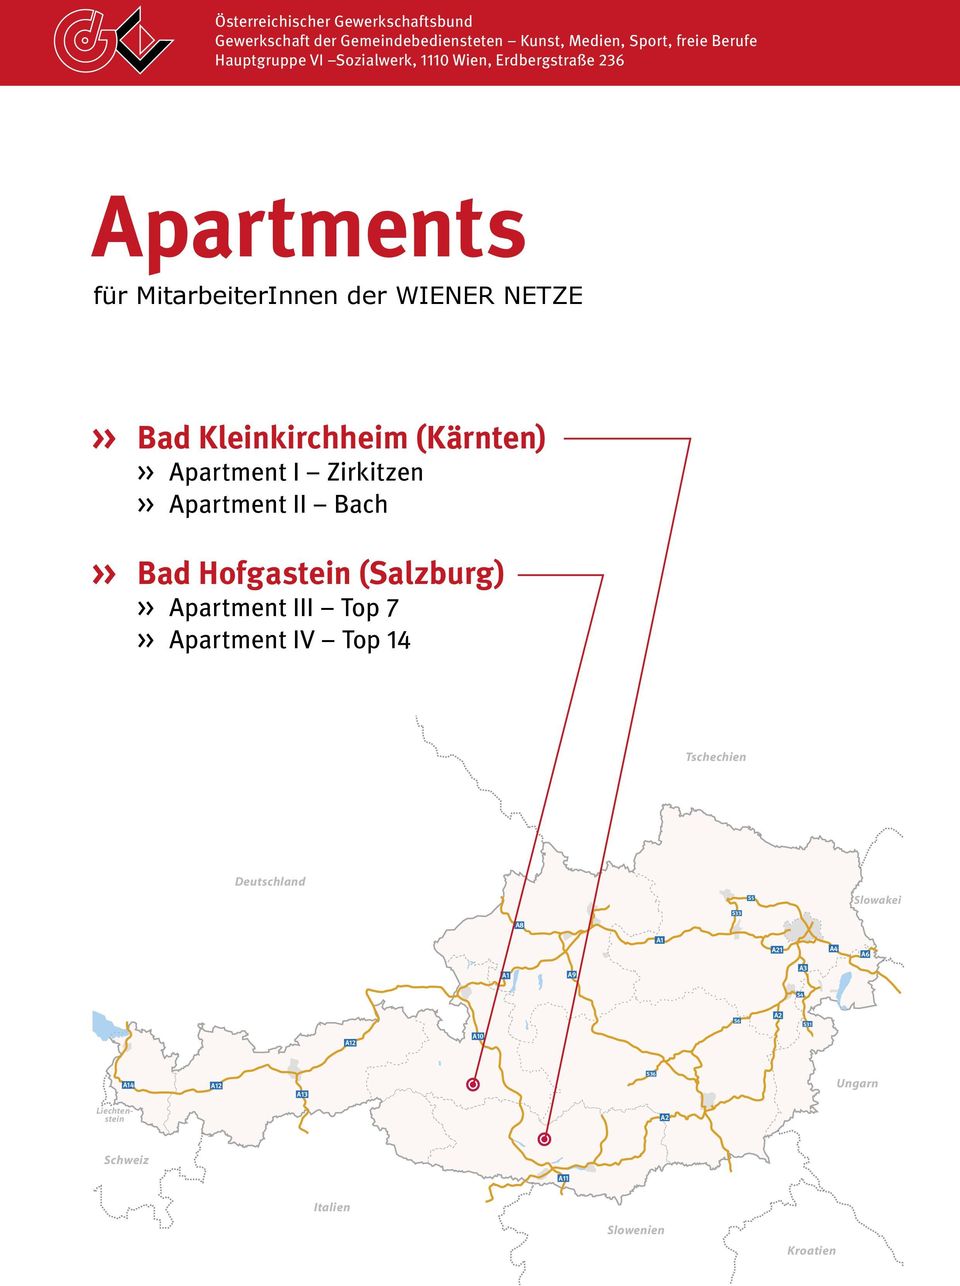 Apartment IV Top 14 Tschechien Deutschland S5 Slowakei S33 A8 A1 A21 A4 A6 A1 A9 A3 S4